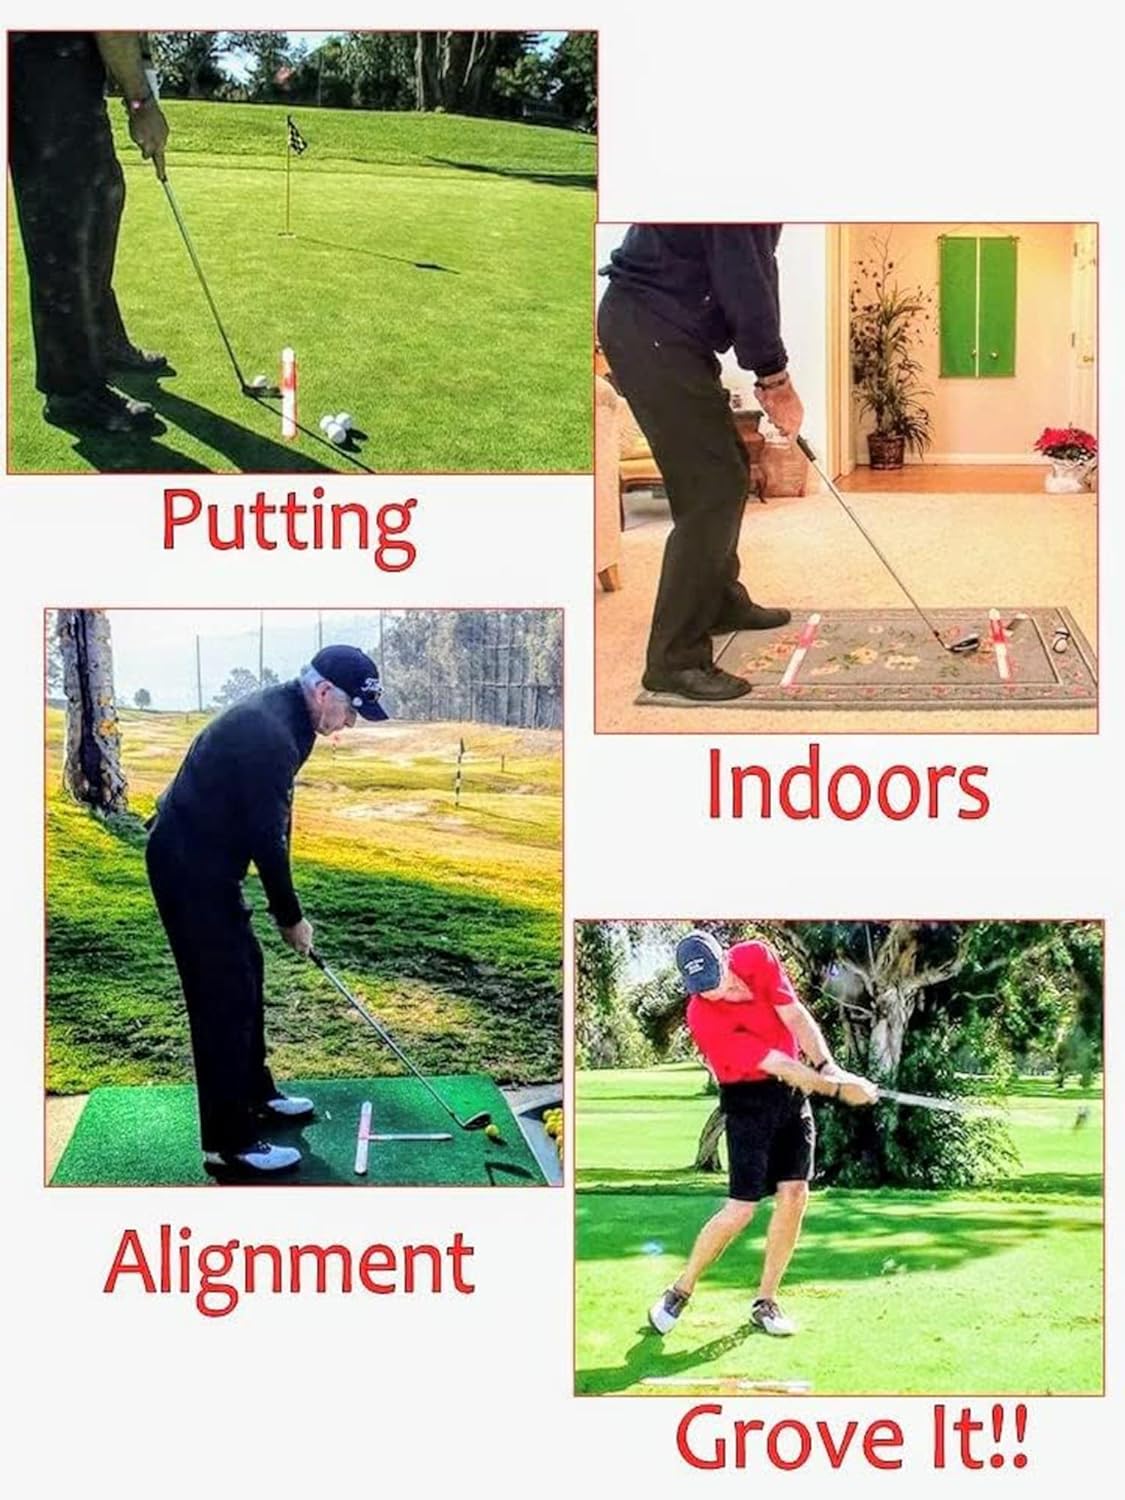 Inside Move Golf Swing Training Aid